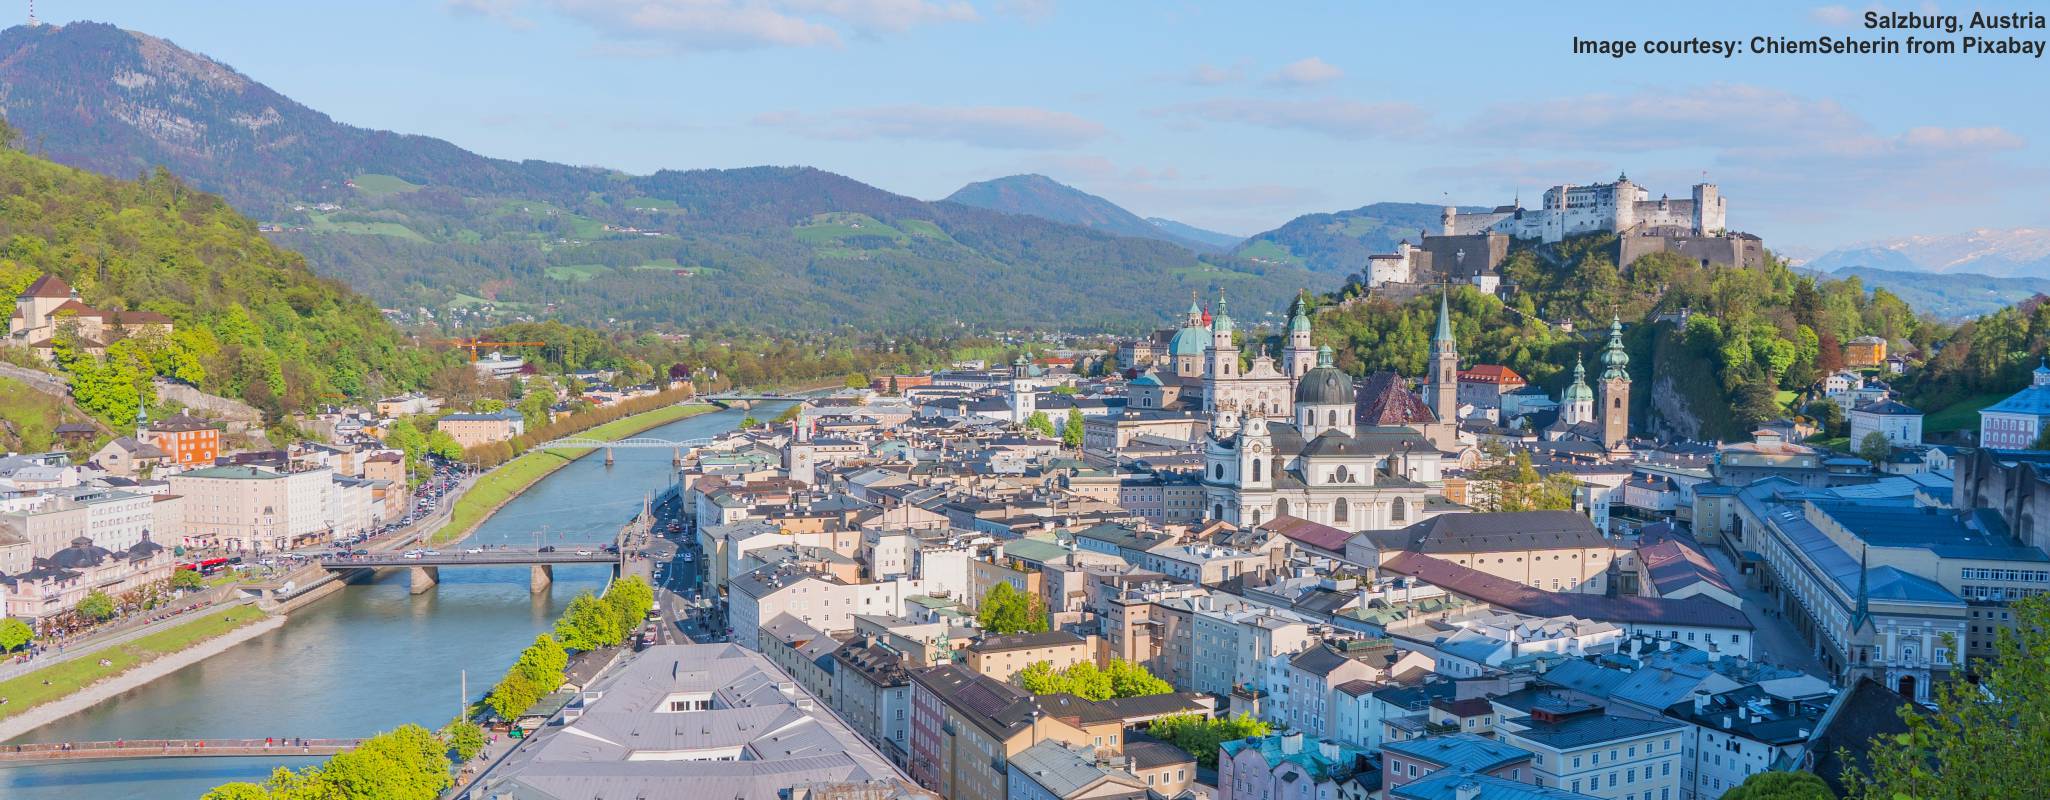 Salzburg image